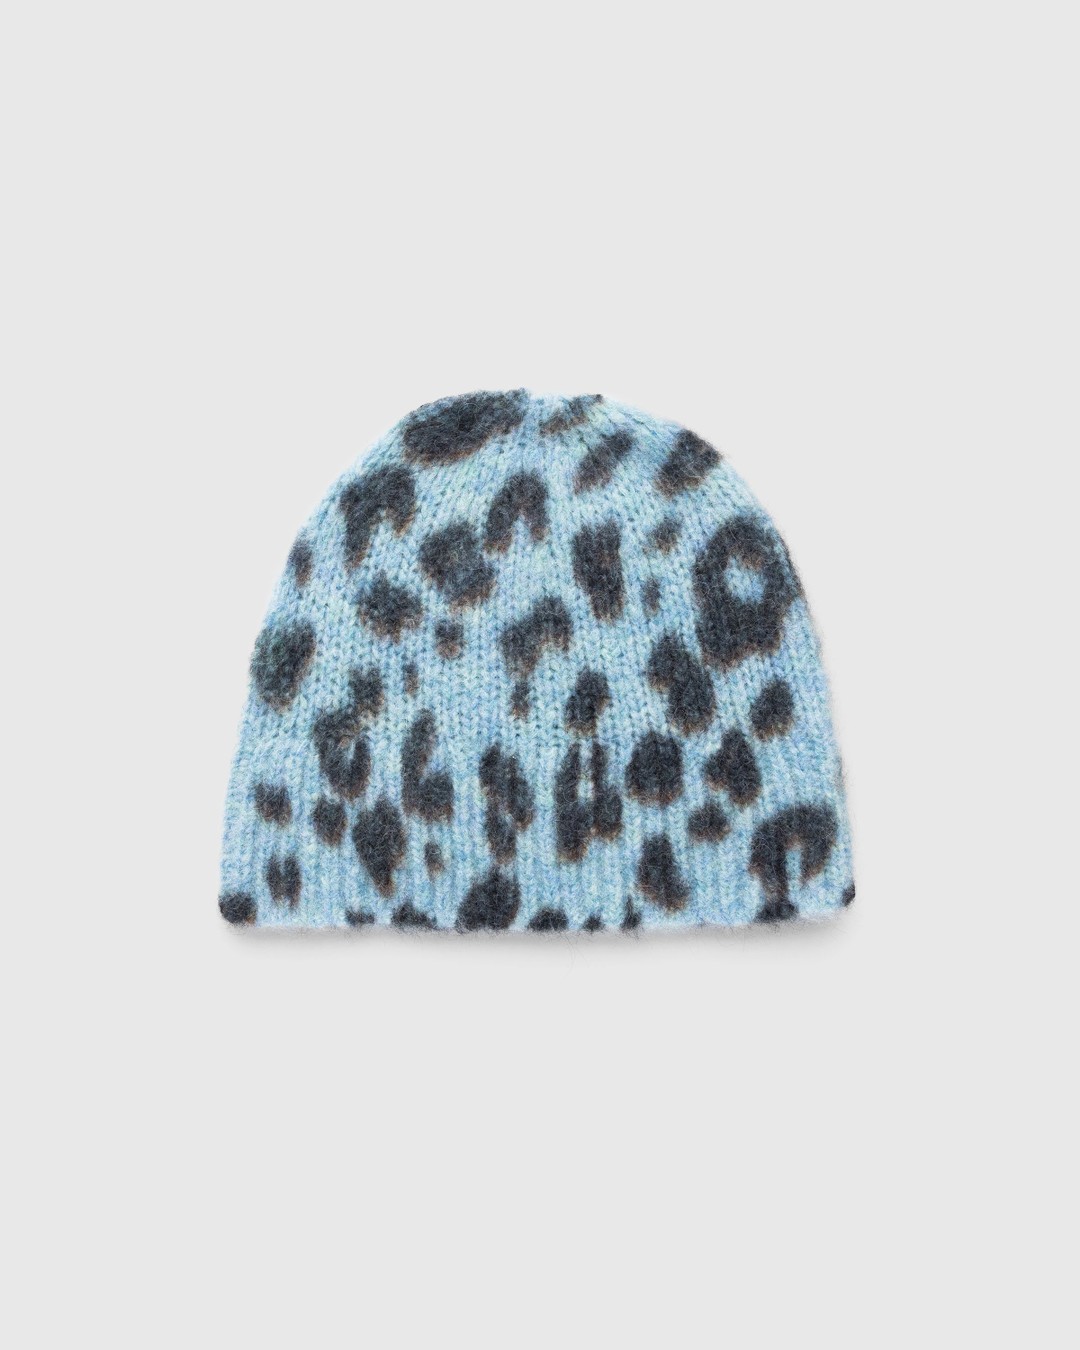 Dries van Noten – Moss Knit Hat Blue - Hats - Blue - Image 1